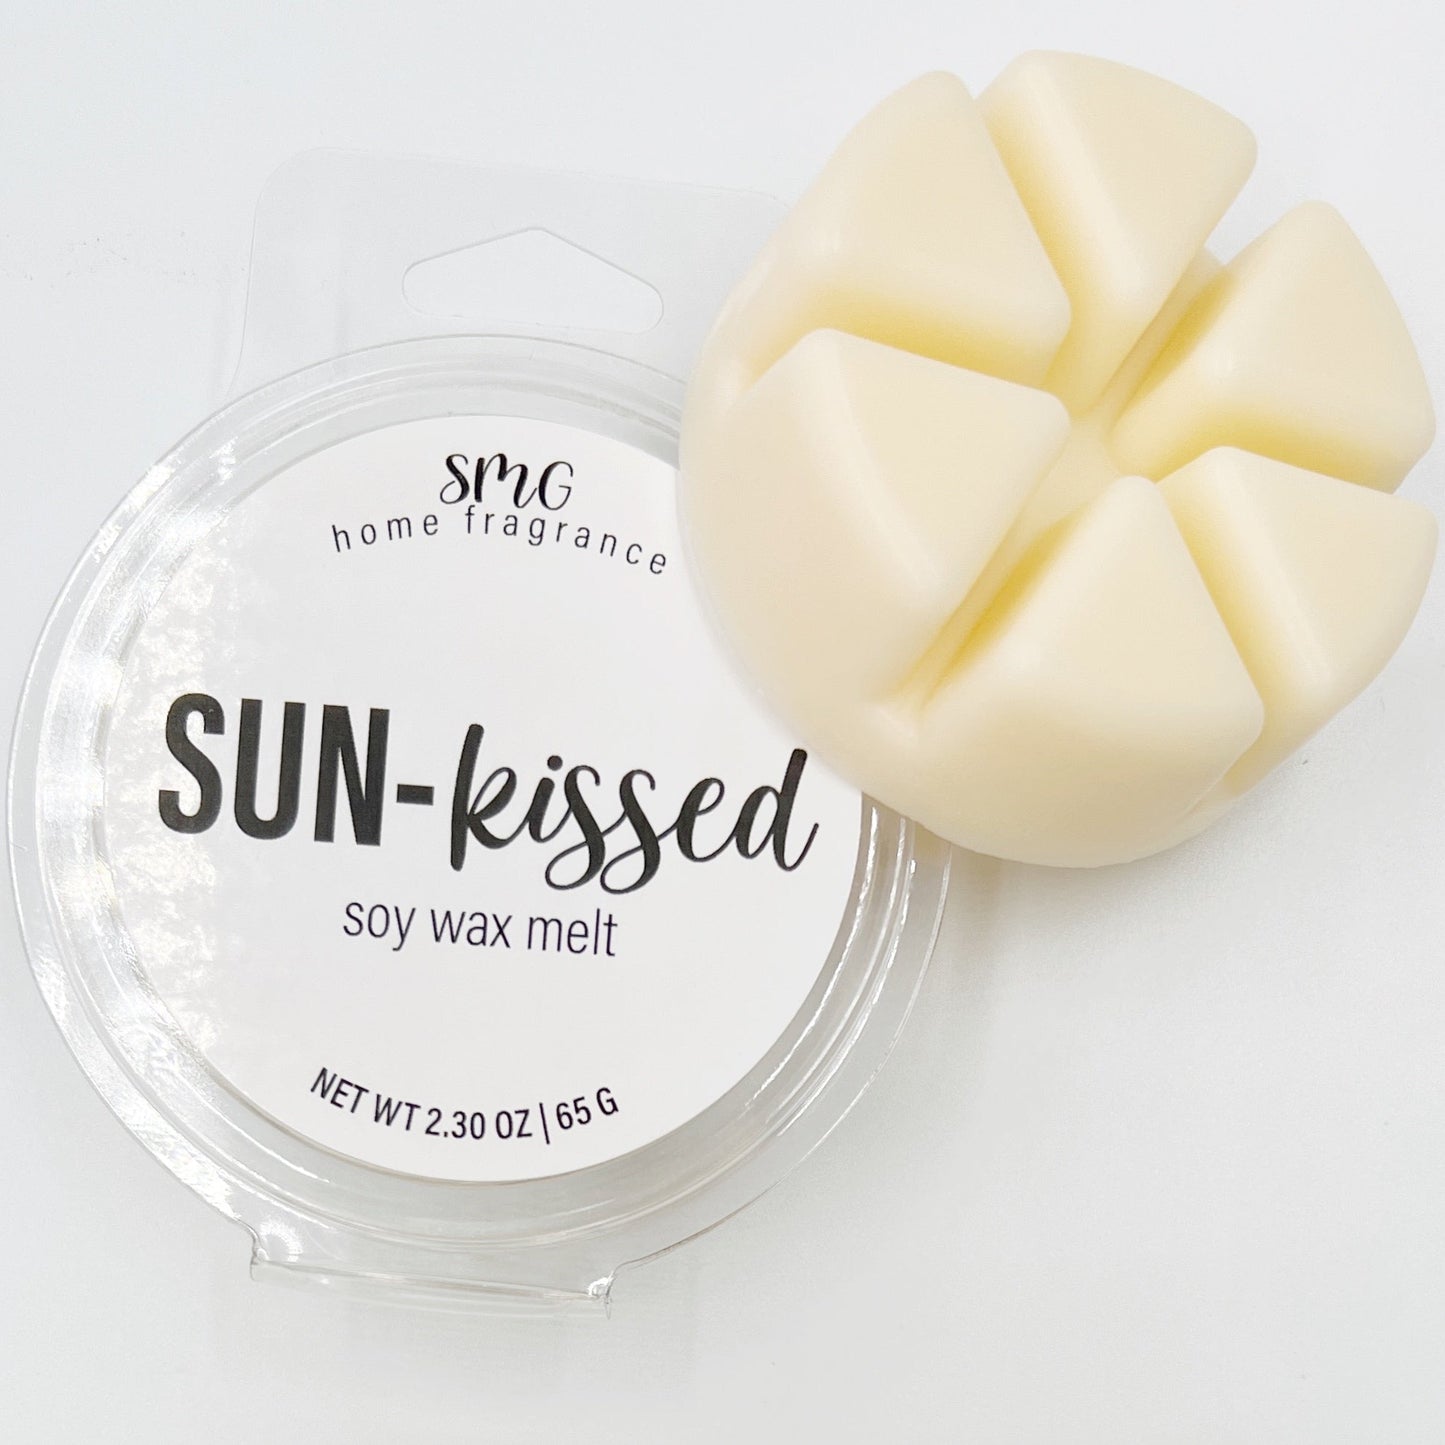 Sun-kissed Wax Melt